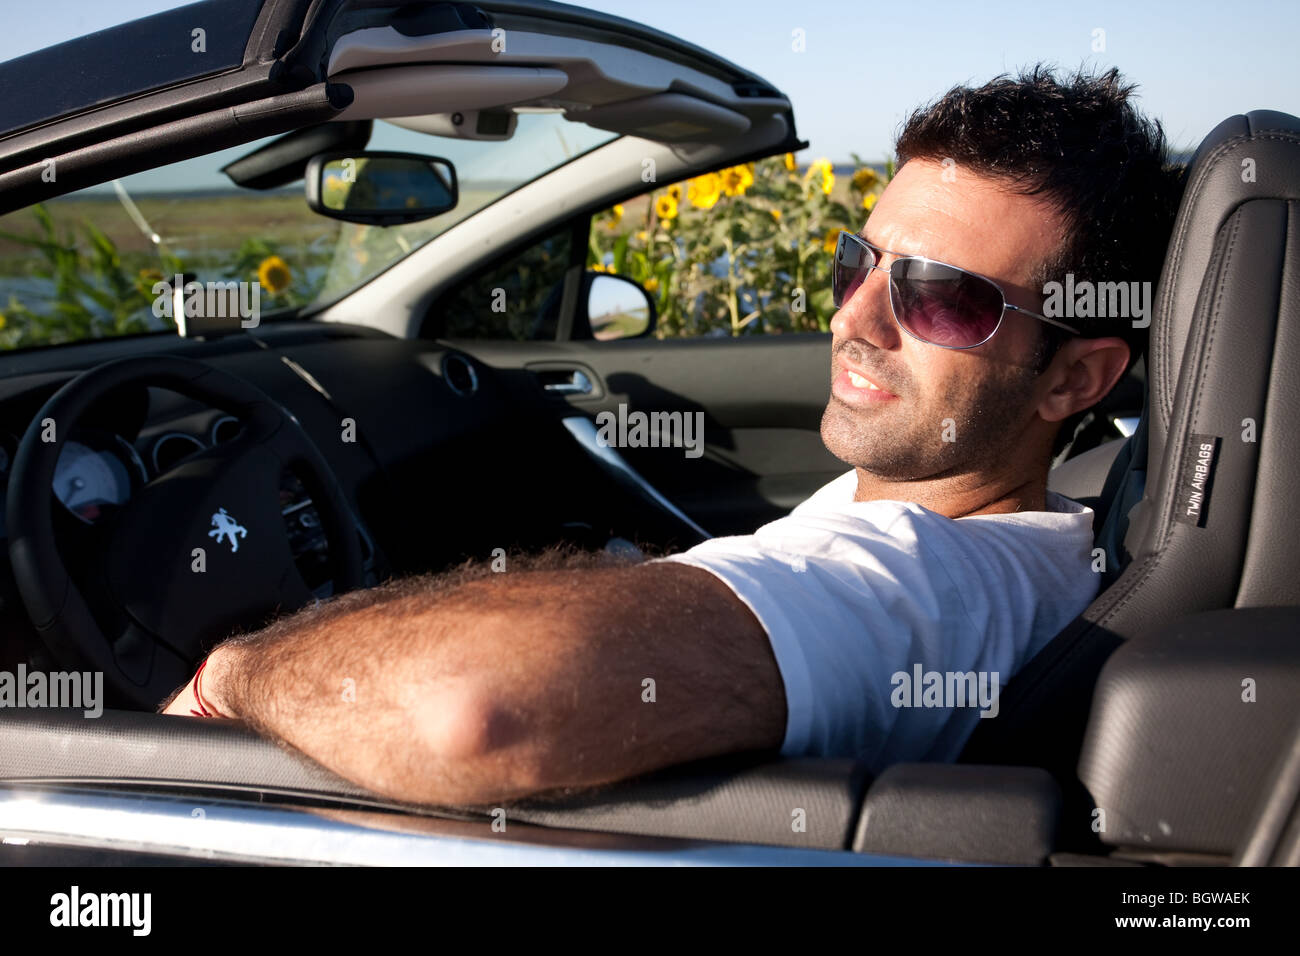 A cool man on a convertible car driving near a sunflower field Stock Photo